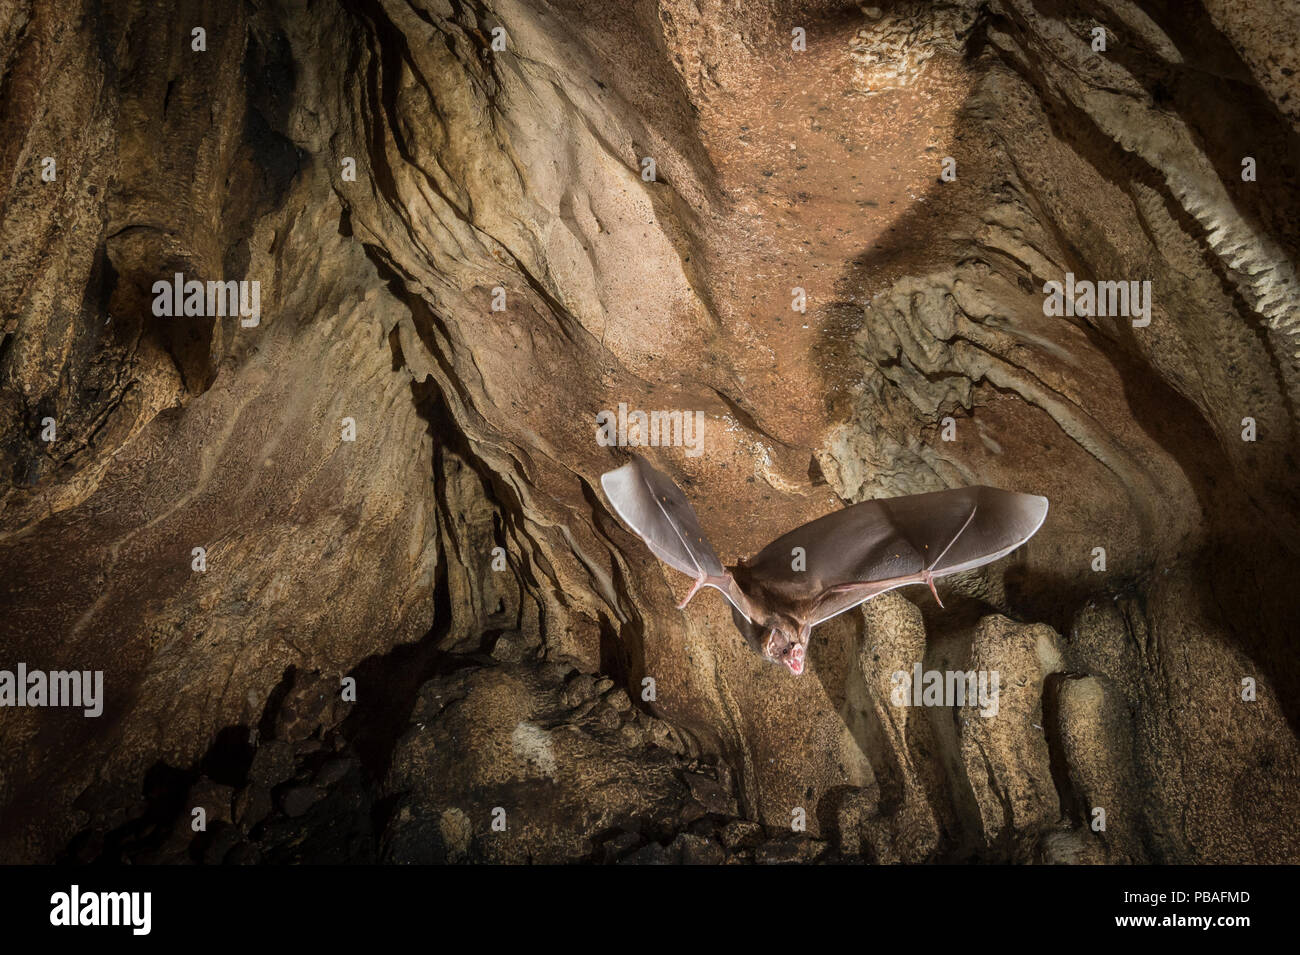 Common vampire bat (Desmodus rotundus) exiting cave, Costa Rica, March 2014. Stock Photo